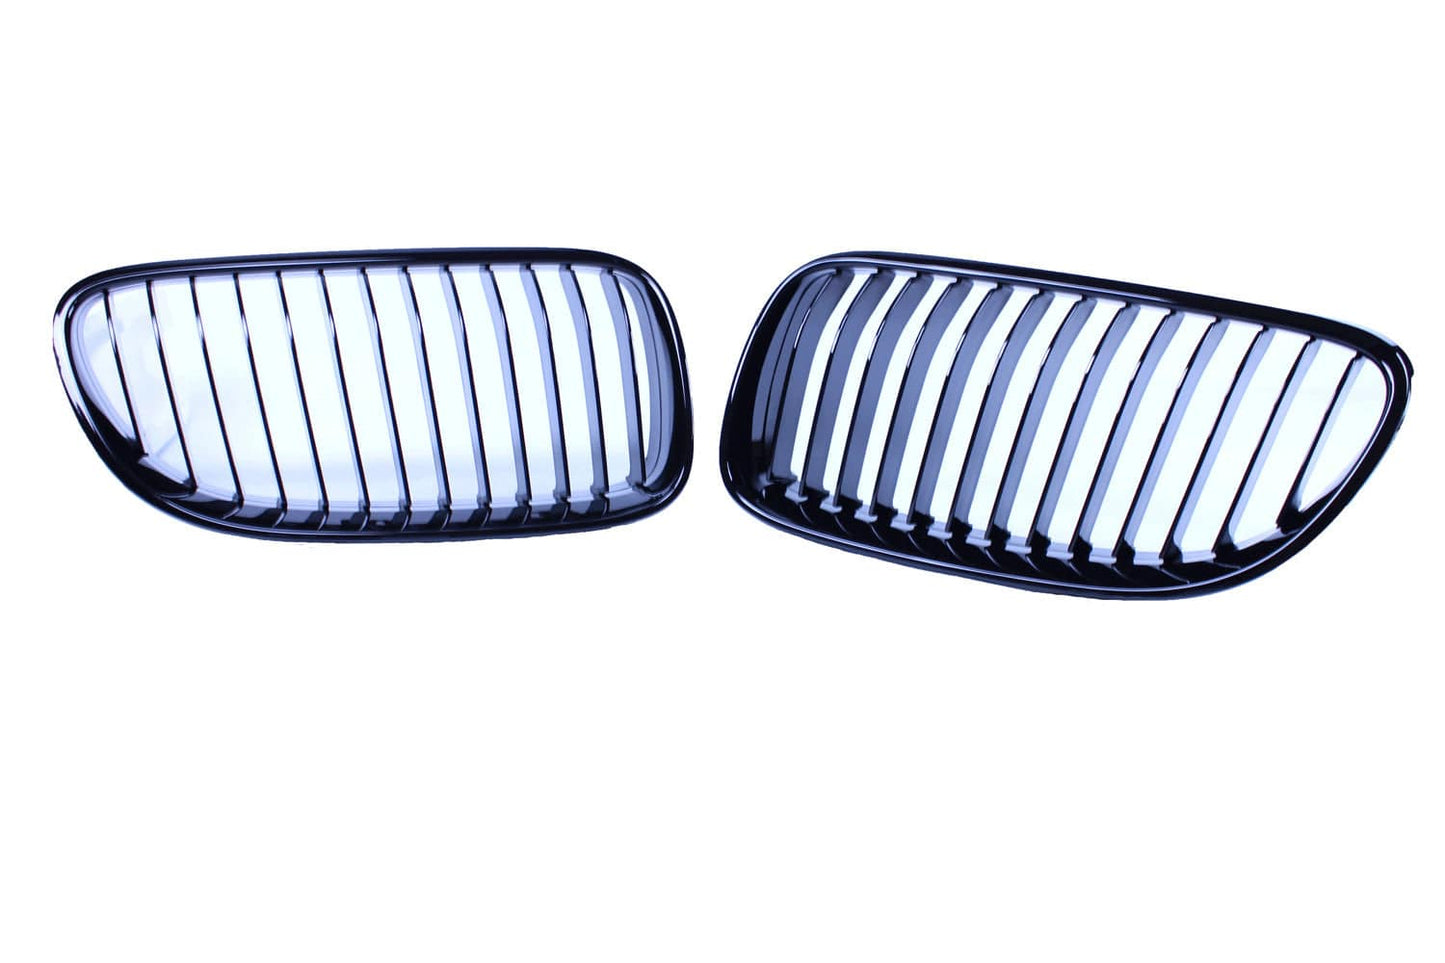 Grill kidneys compatible with BMW 3 series coupe/convertible E92 - E93 LCI gloss black single bars